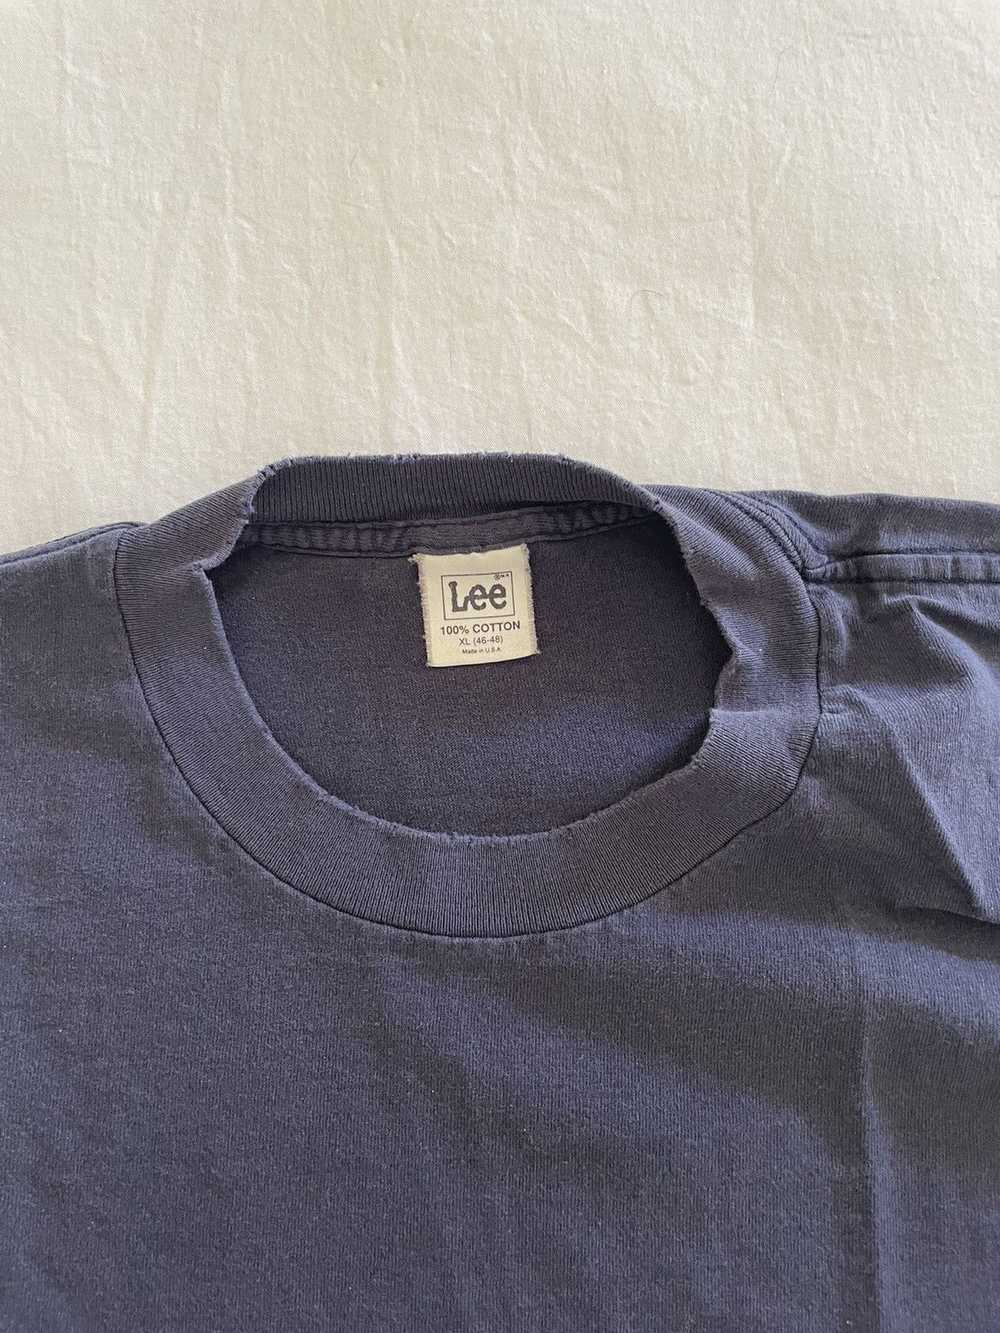 Lee Lee L/XL single stitch navy vintage tshirt - image 3